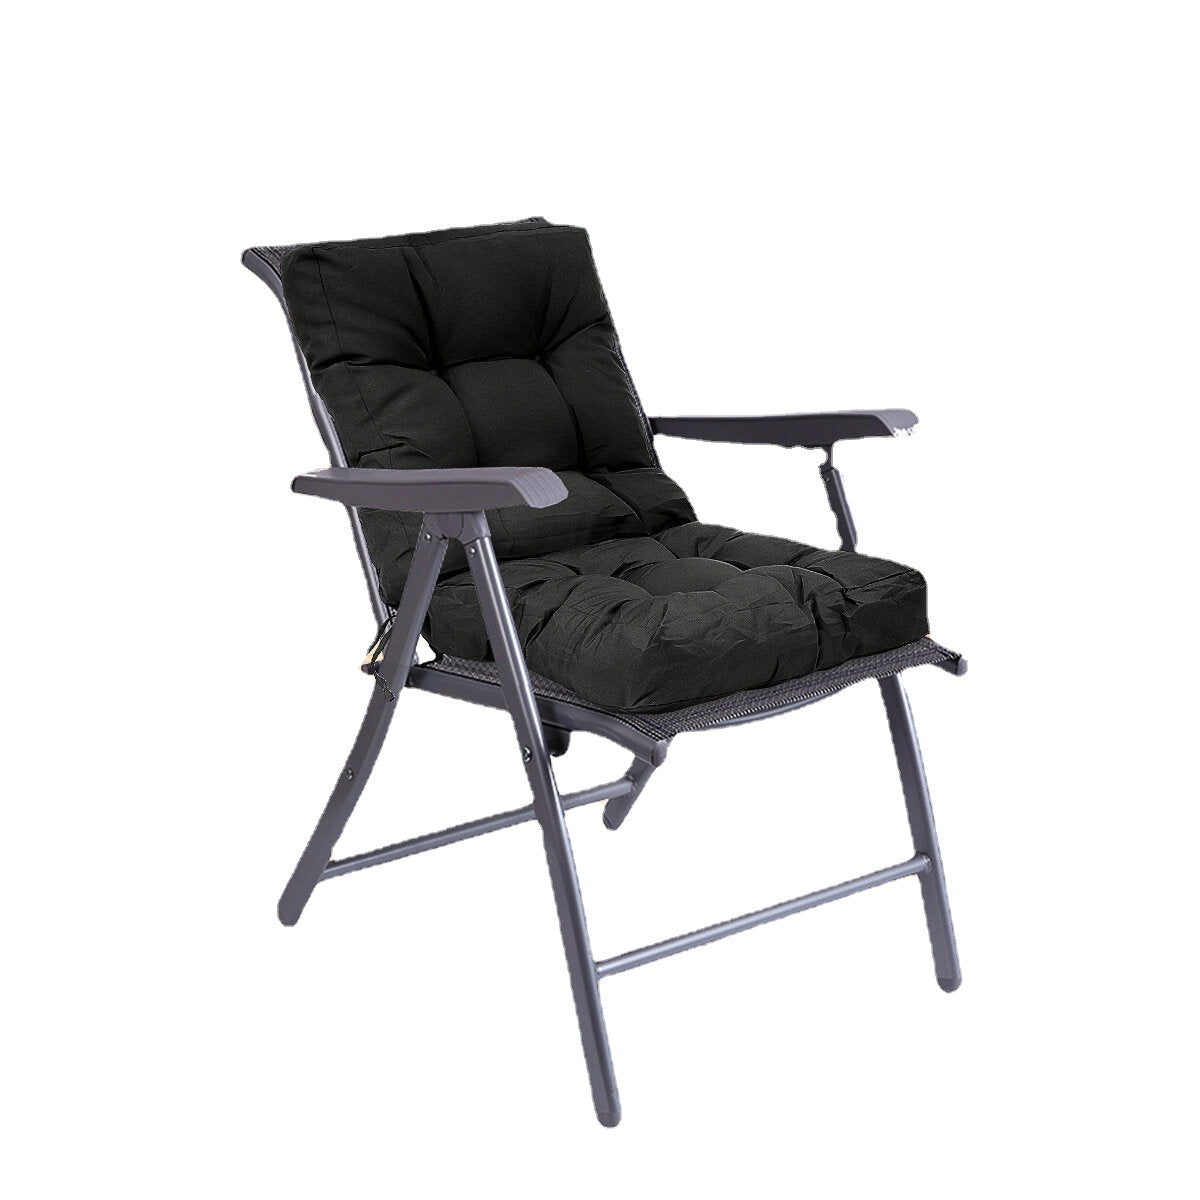 High Back Chair Cushion Waterproof Sofa Recliner Chair Cushion Seat Back Pad Tatami Mat for Office Home Patio Backyard Garden